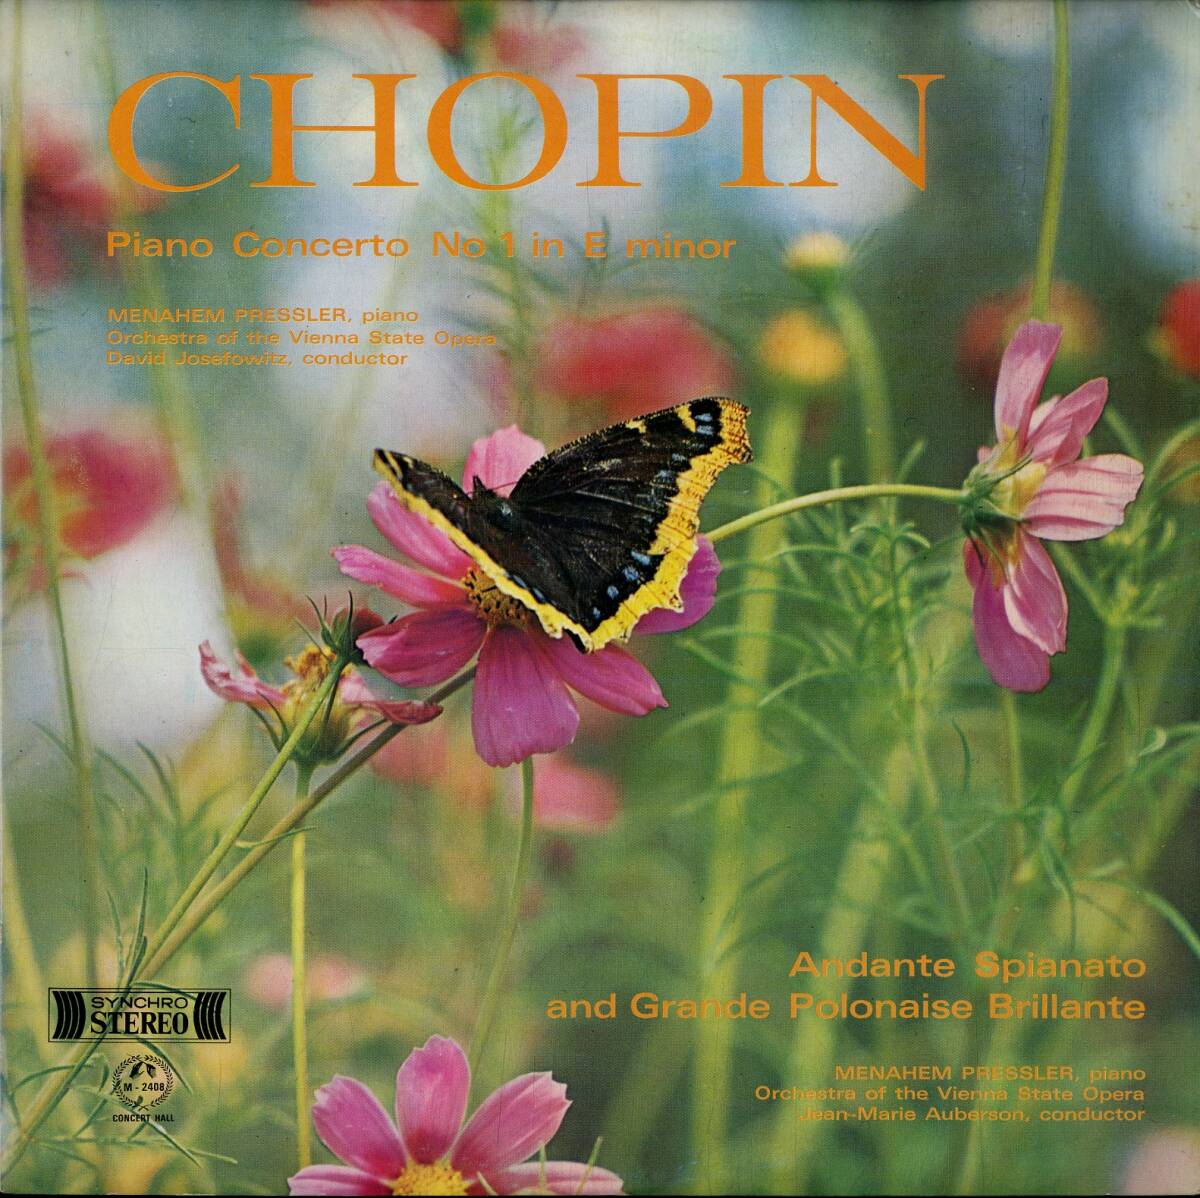 A00580384/LP/メナヘム・プレスラー(ピアノ)「ショパン/ピアノ協奏曲第1番 ホ短調 作品11・アンダンテ・スピアナートと華麗なる大ポロネの画像1